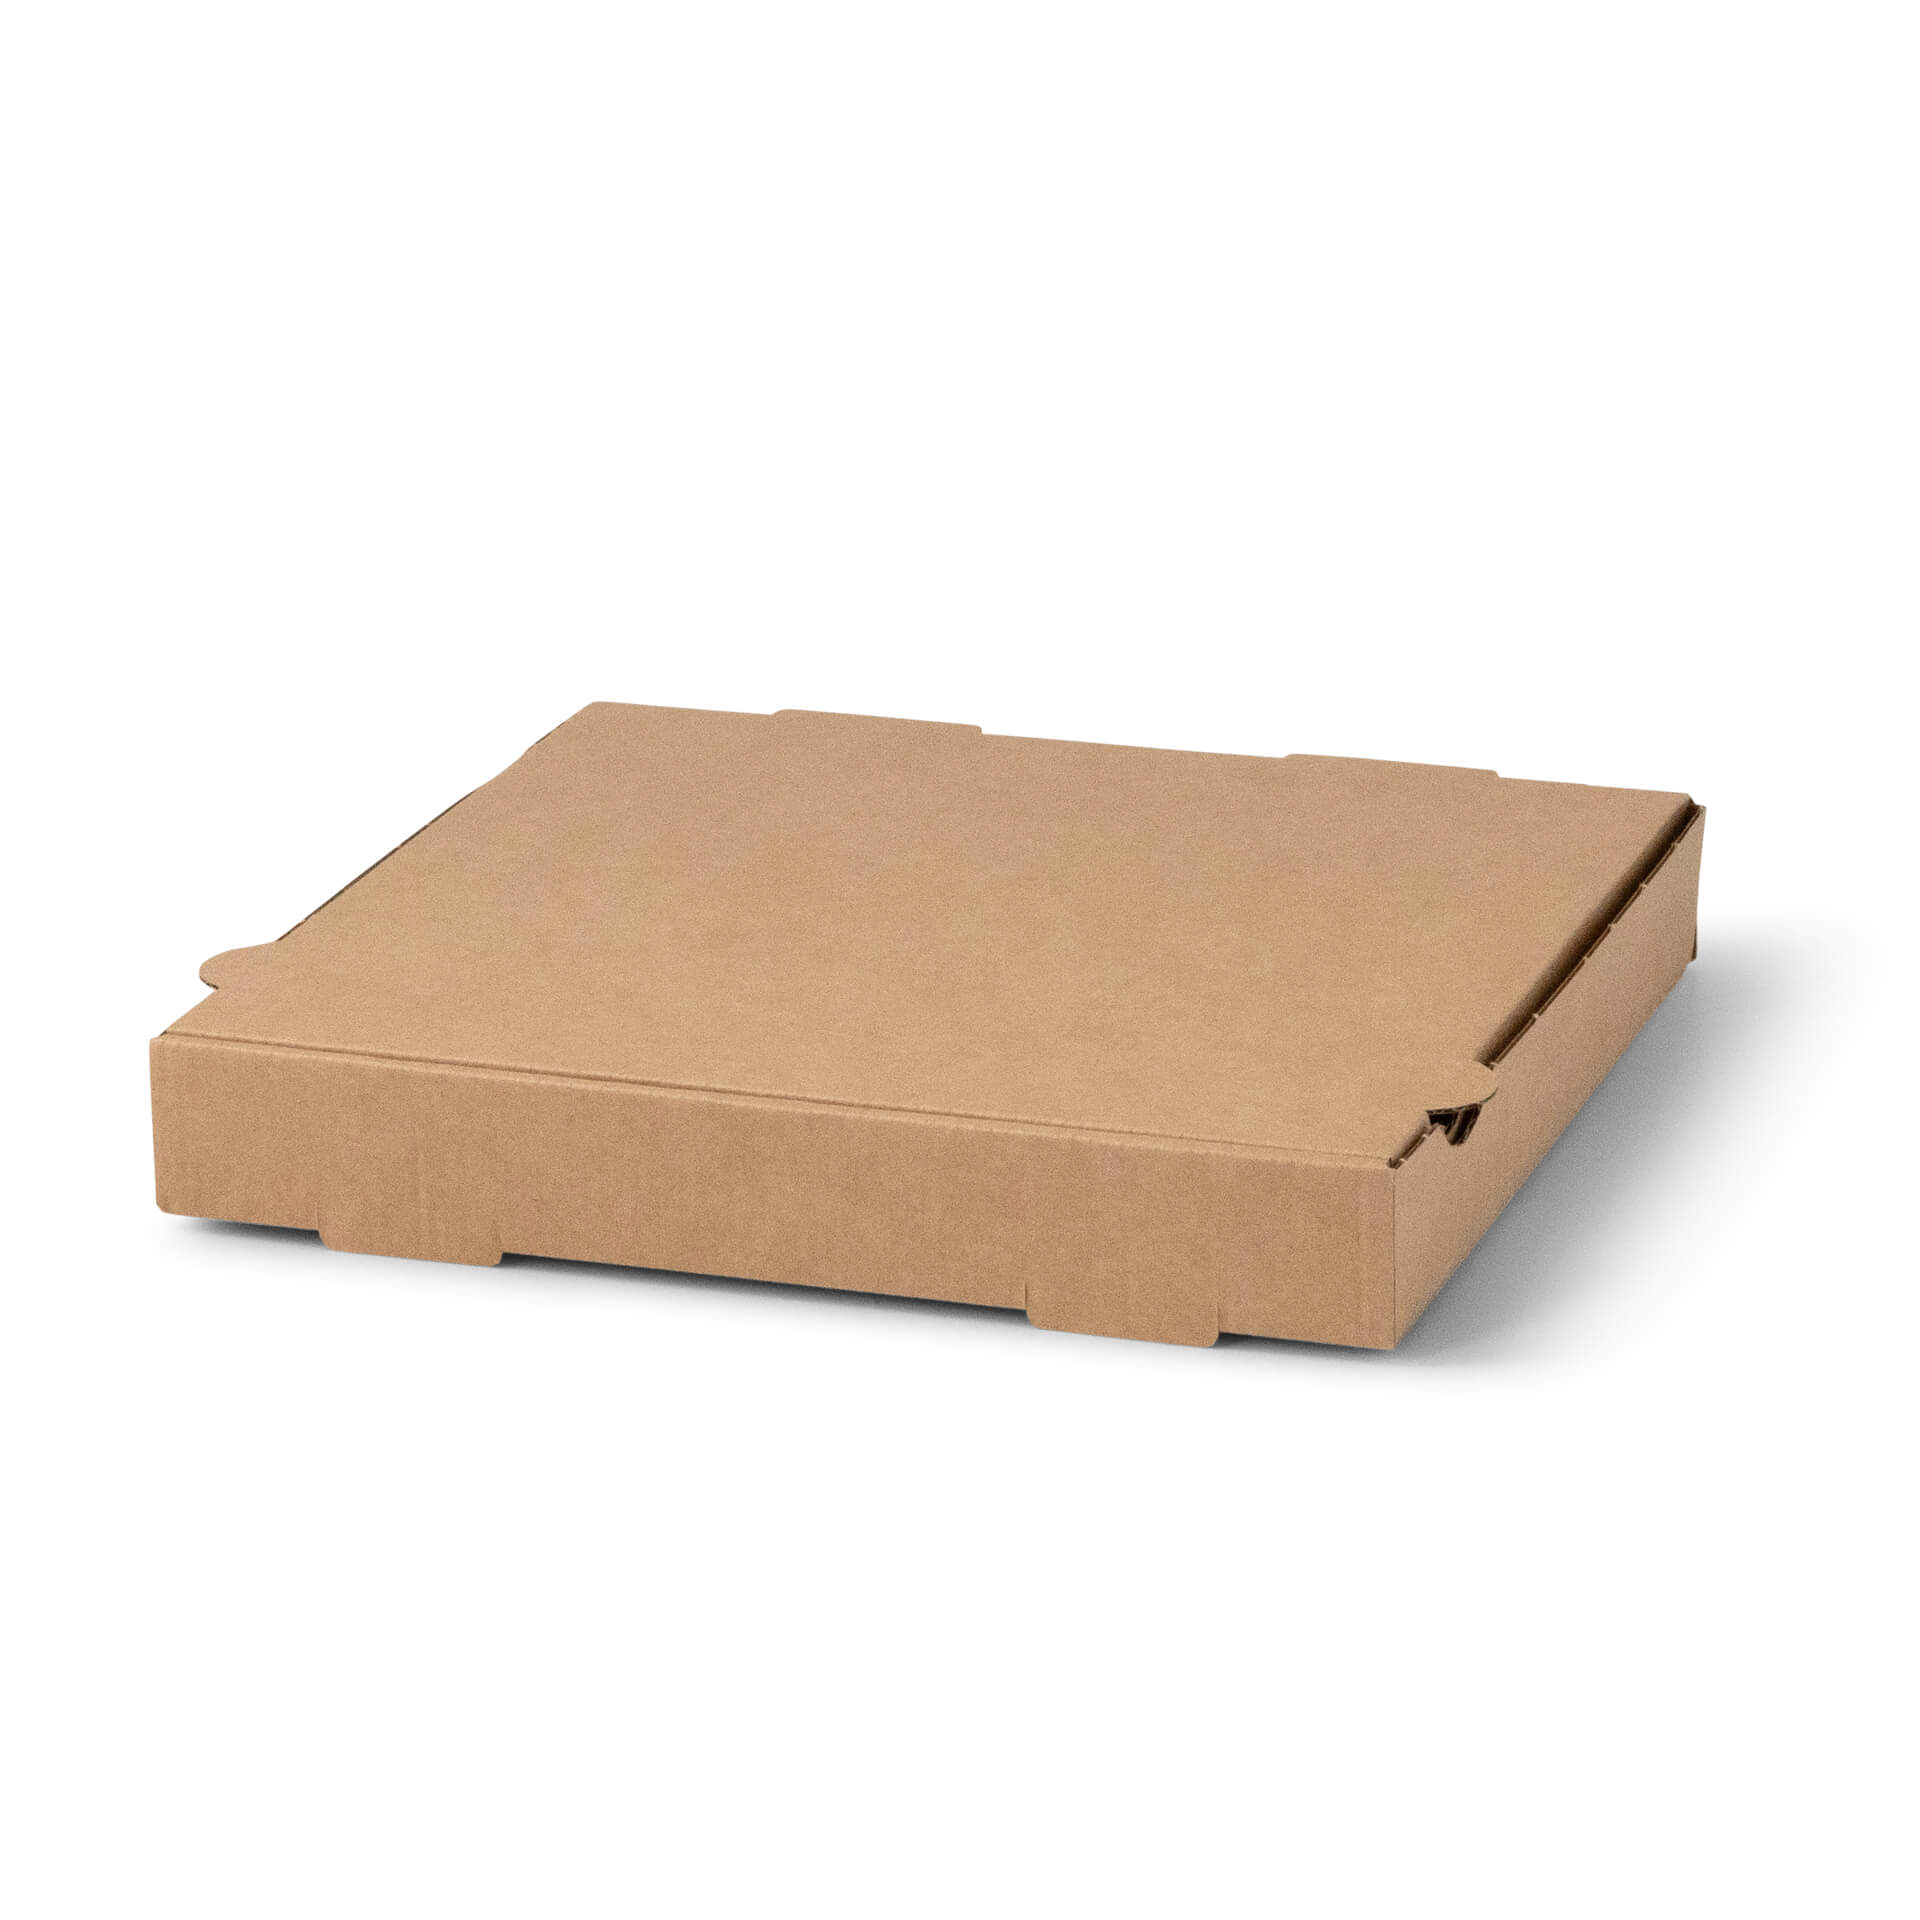 Pizzakartons Ø 26 cm, braun